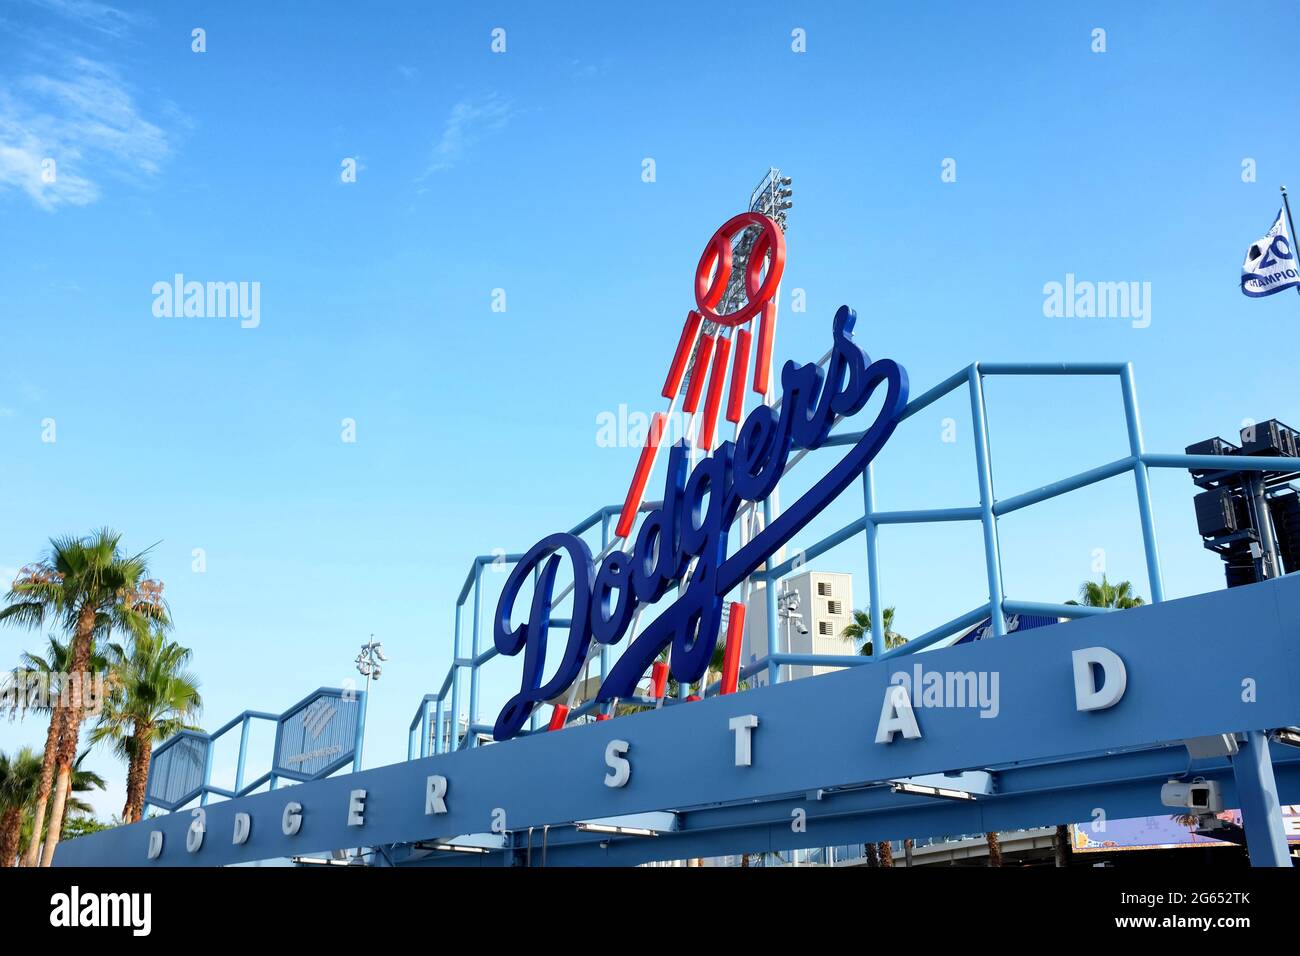 LOS ANGELES, KALIFORNIEN, 29. JUNI 2021: Dodger Stadium. Nahaufnahme des Baseballs-Teams-Logos am Eingang des Centerfield. Stockfoto